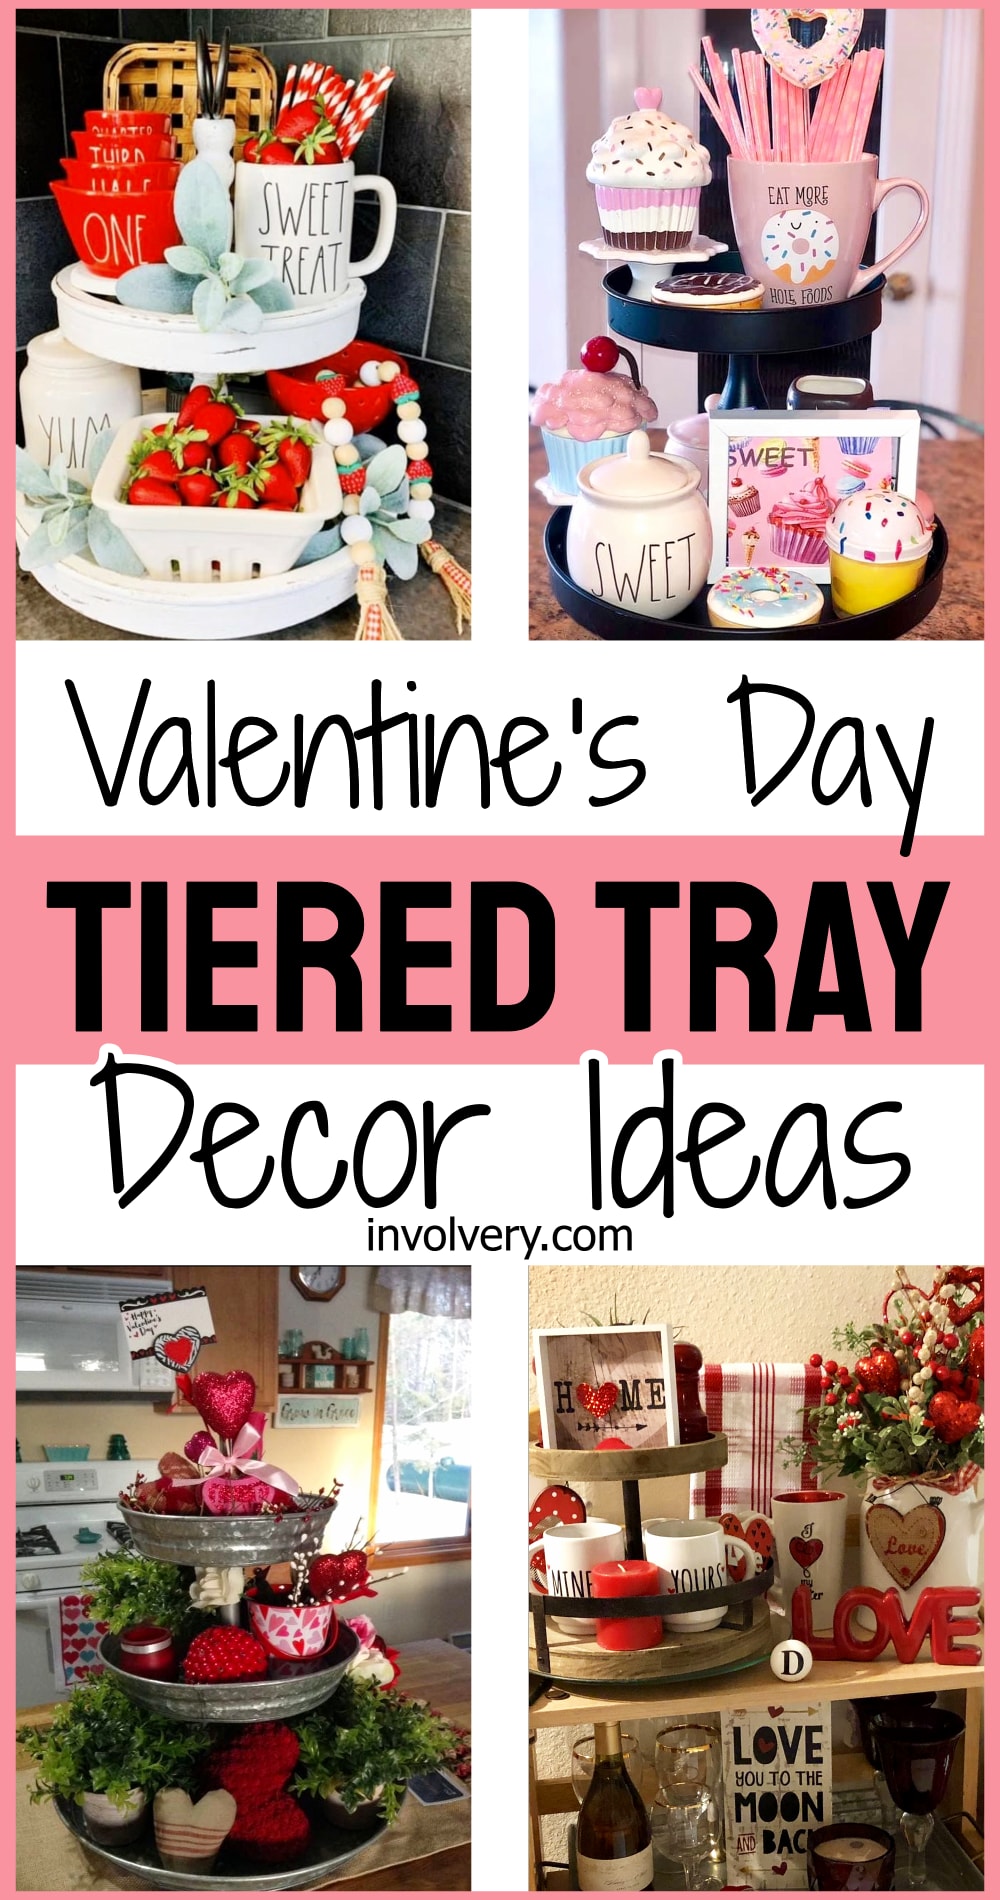 Valentines Day tiered tray decor ideas